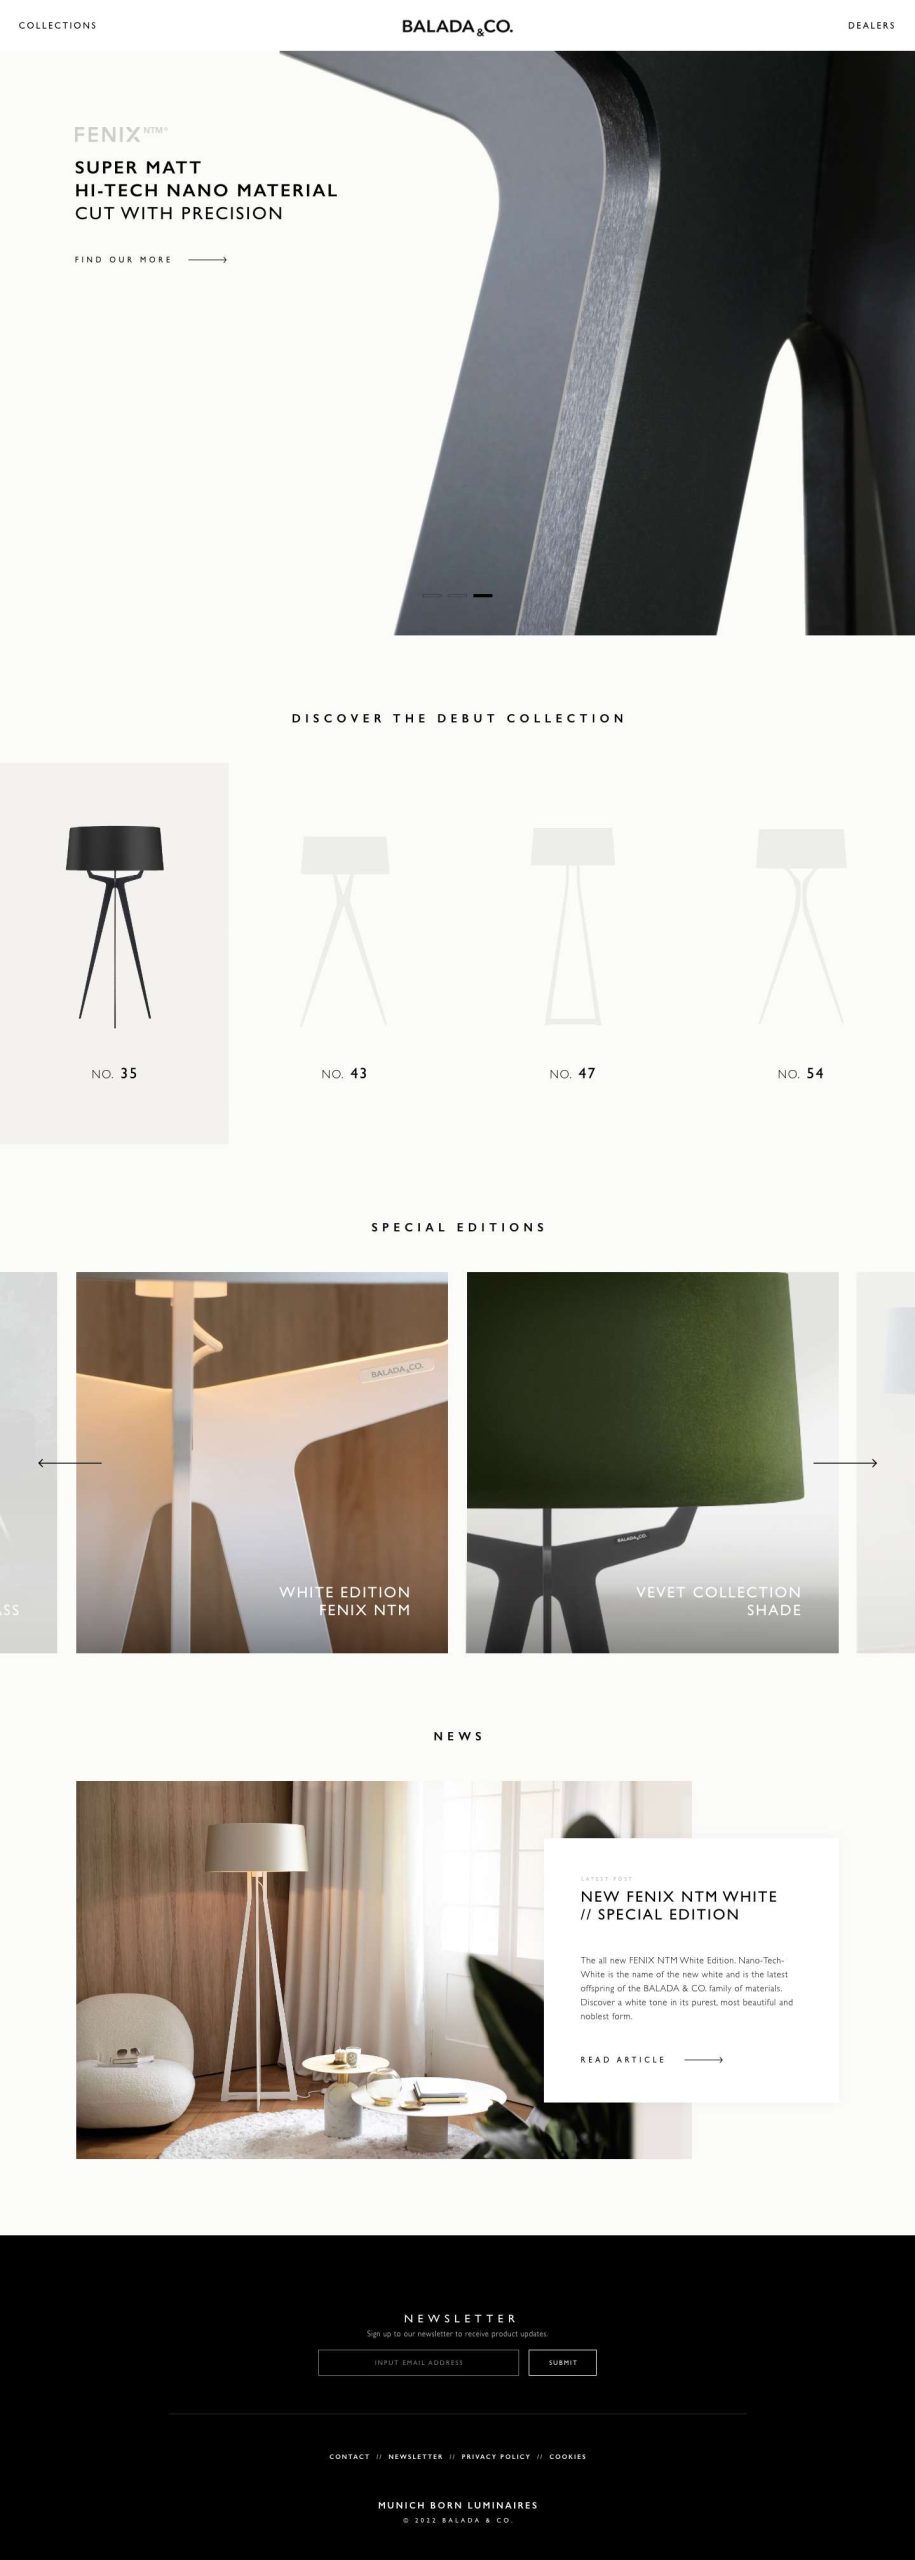 Balada&co website design concept by JW Designer - Luxury German lighting and luminaire company